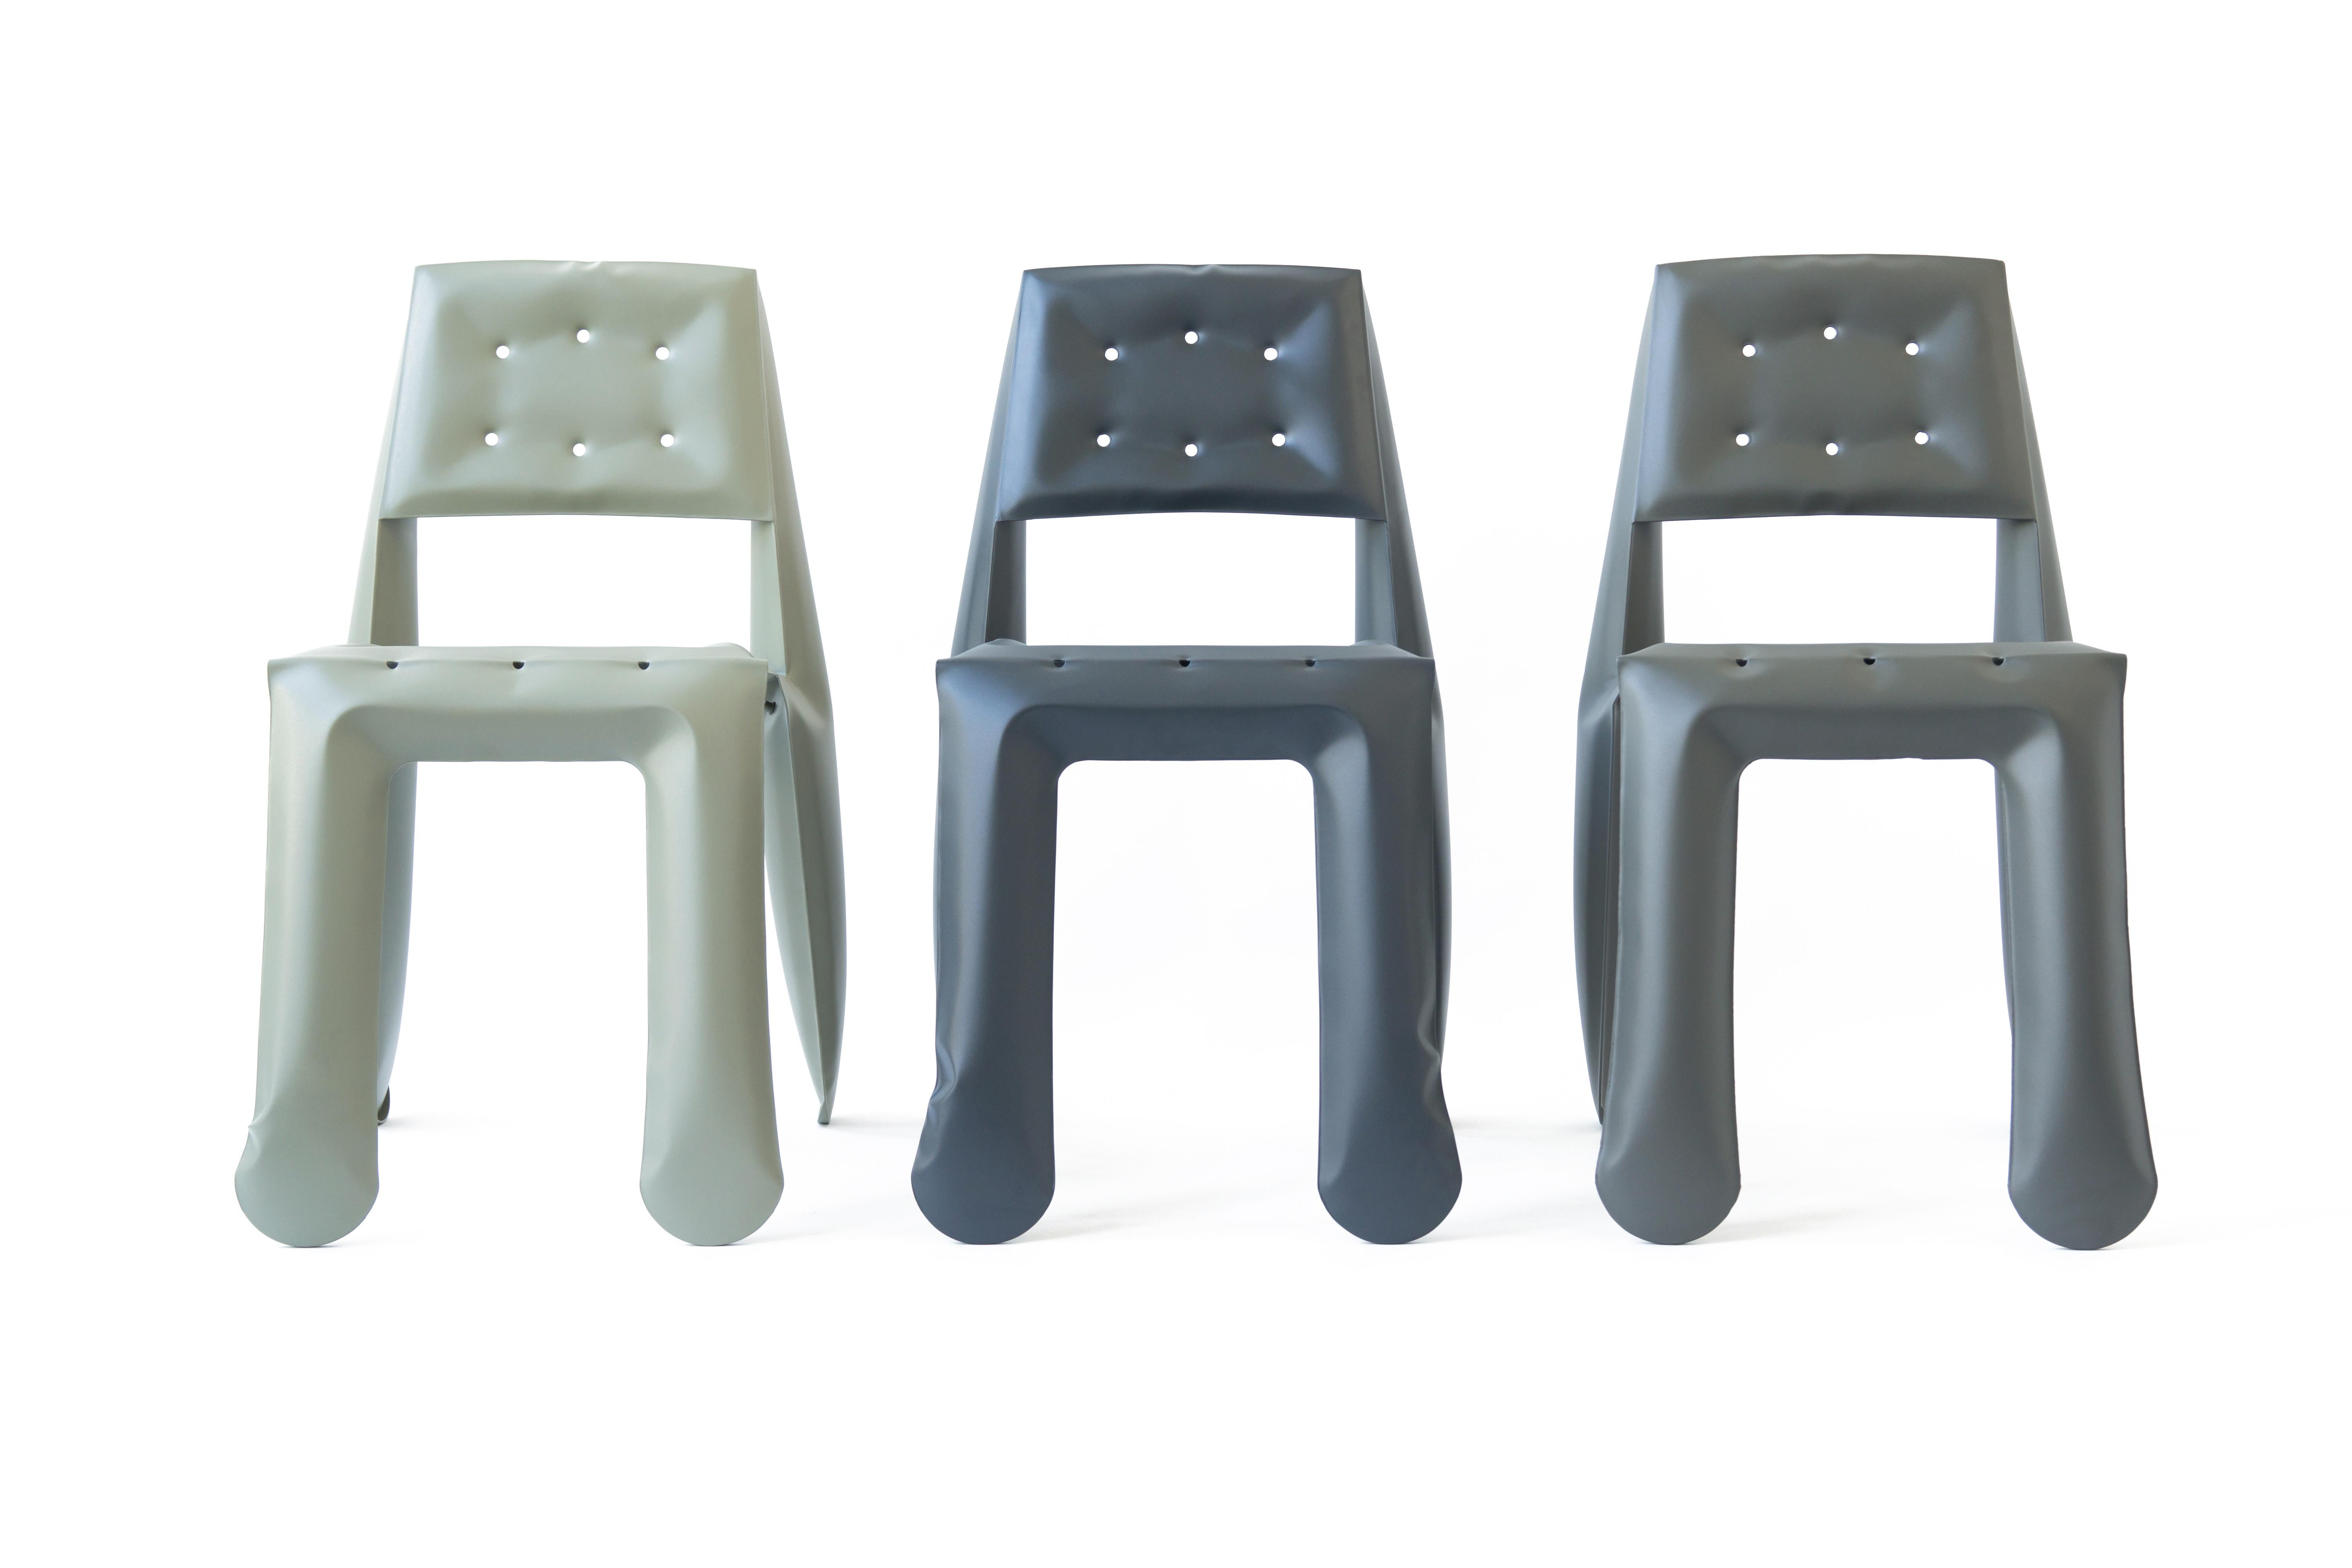 Moss Grey Carbon Steel Chippensteel 0.5 Sculptural Chair by Zieta For Sale 5